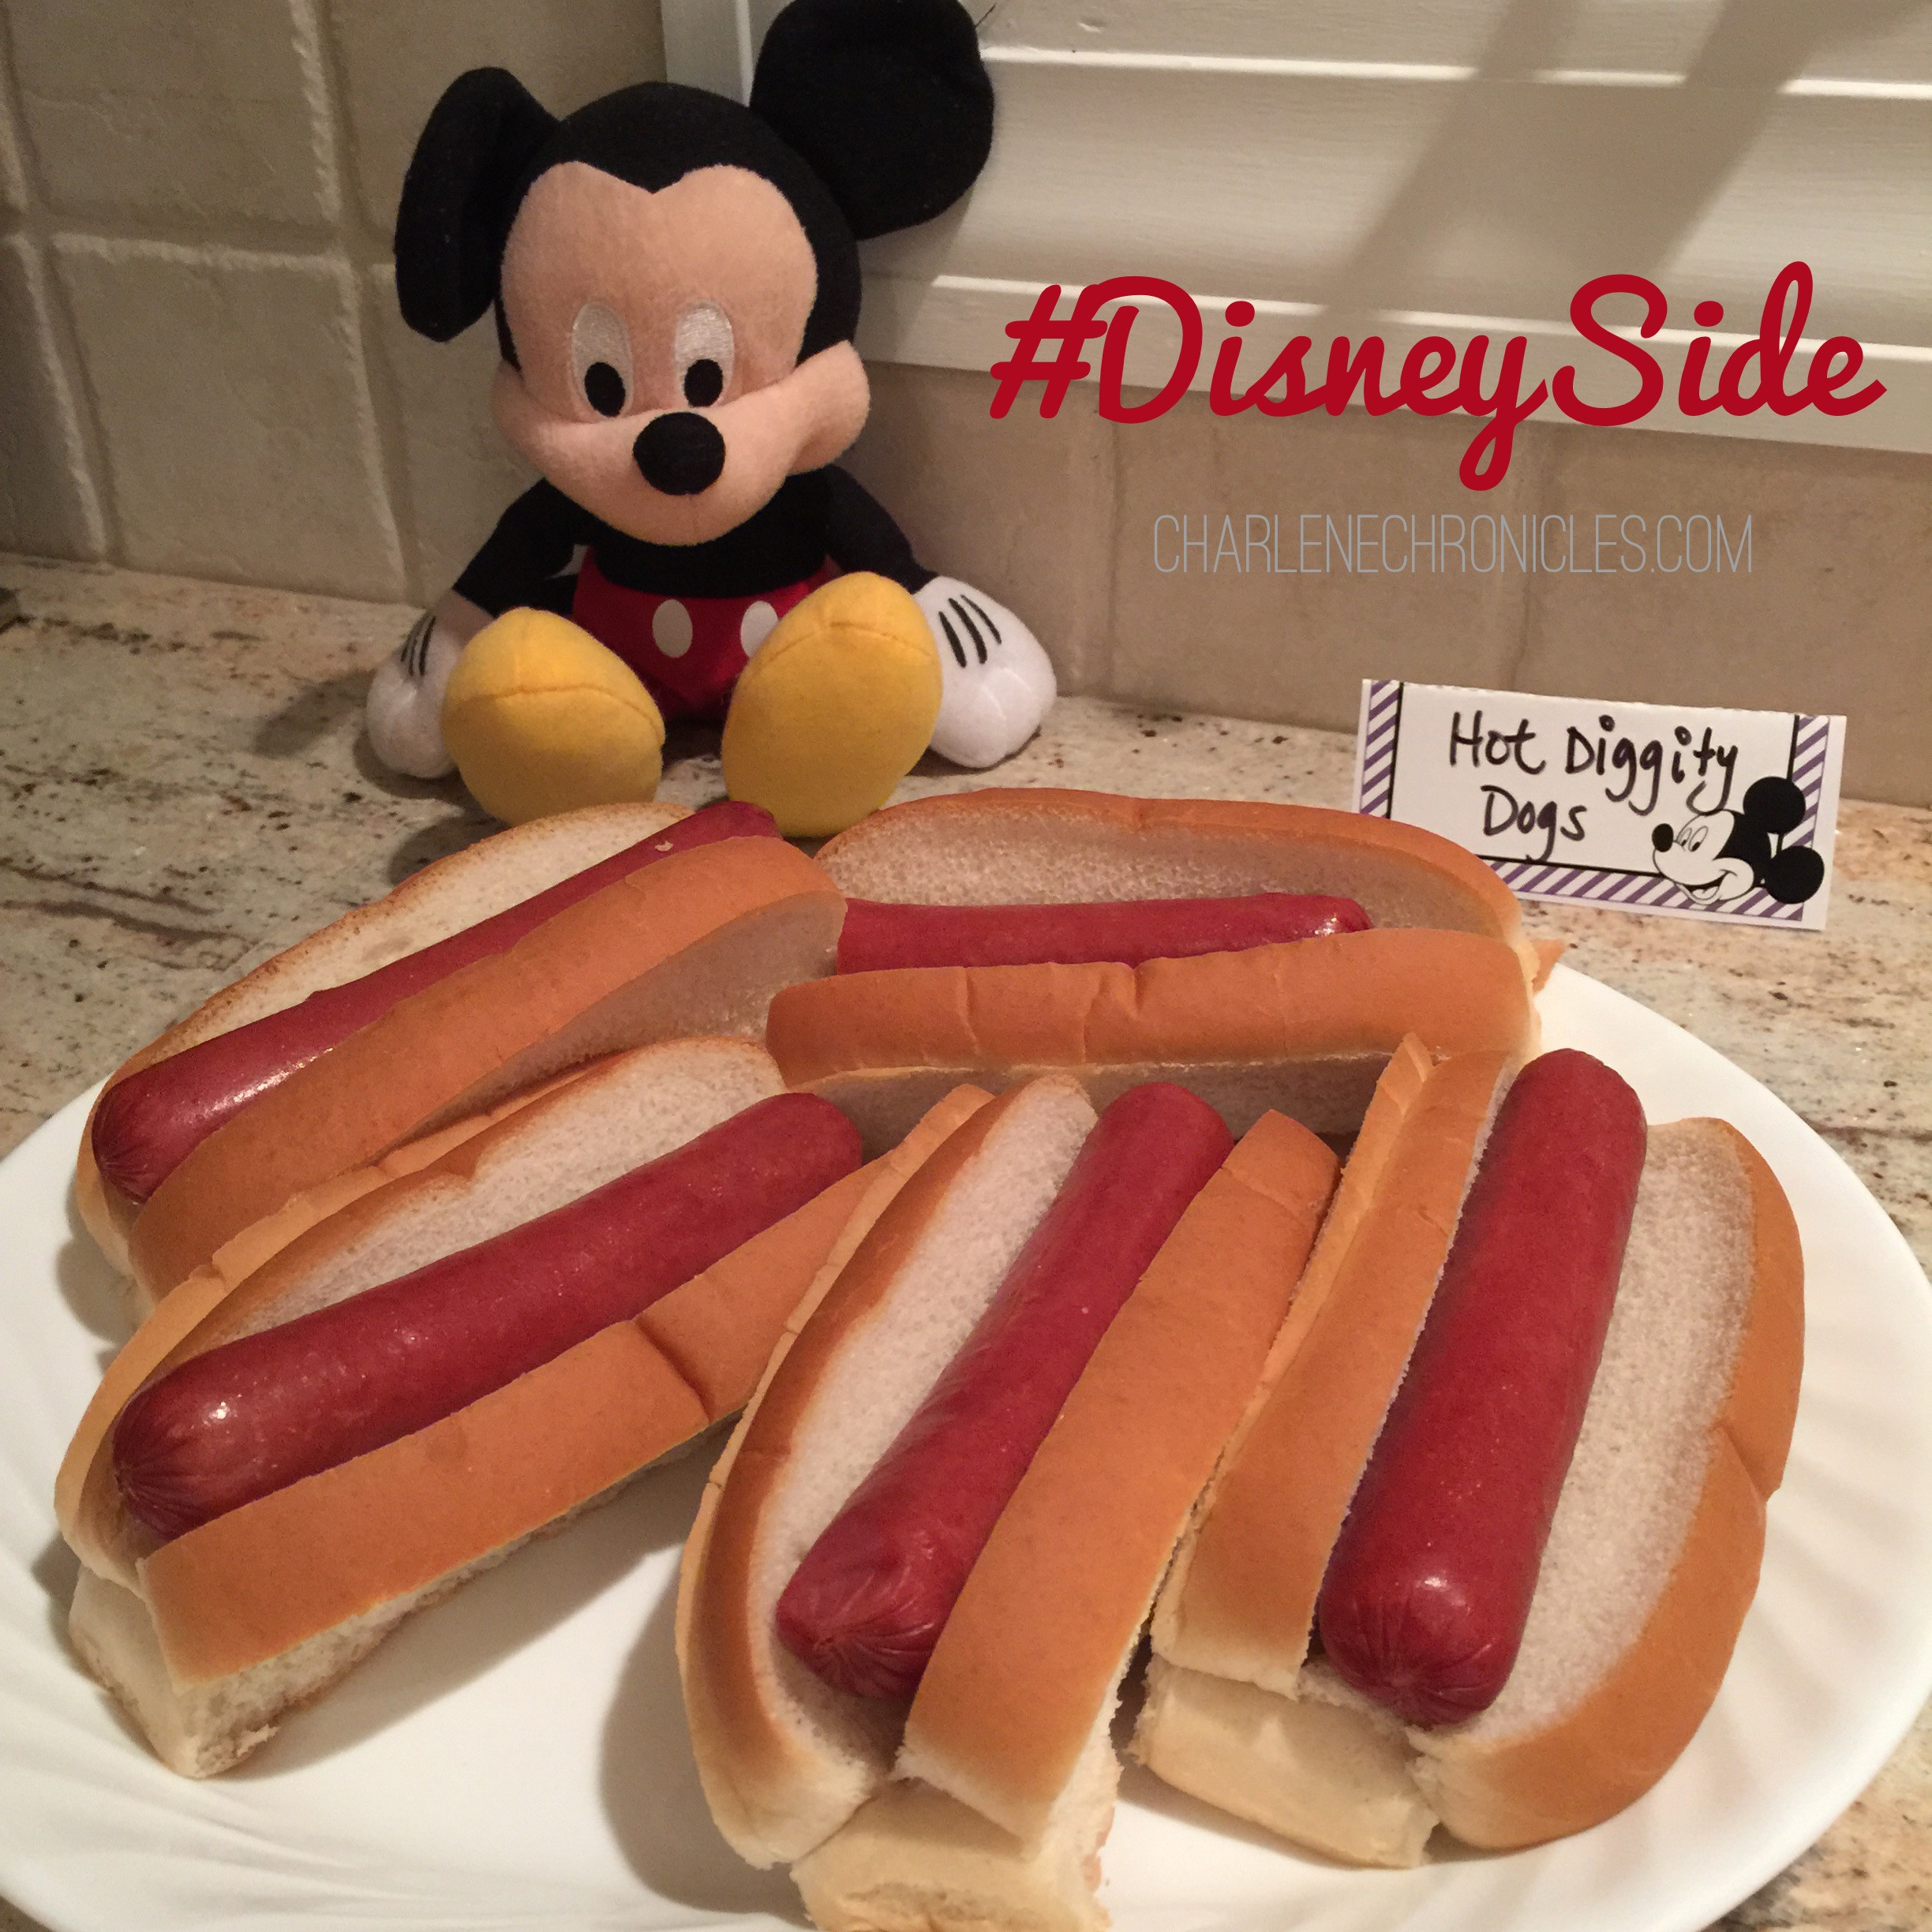 Disney Party Food Ideas
 DisneySide Disney Themed Party Charlene Chronicles